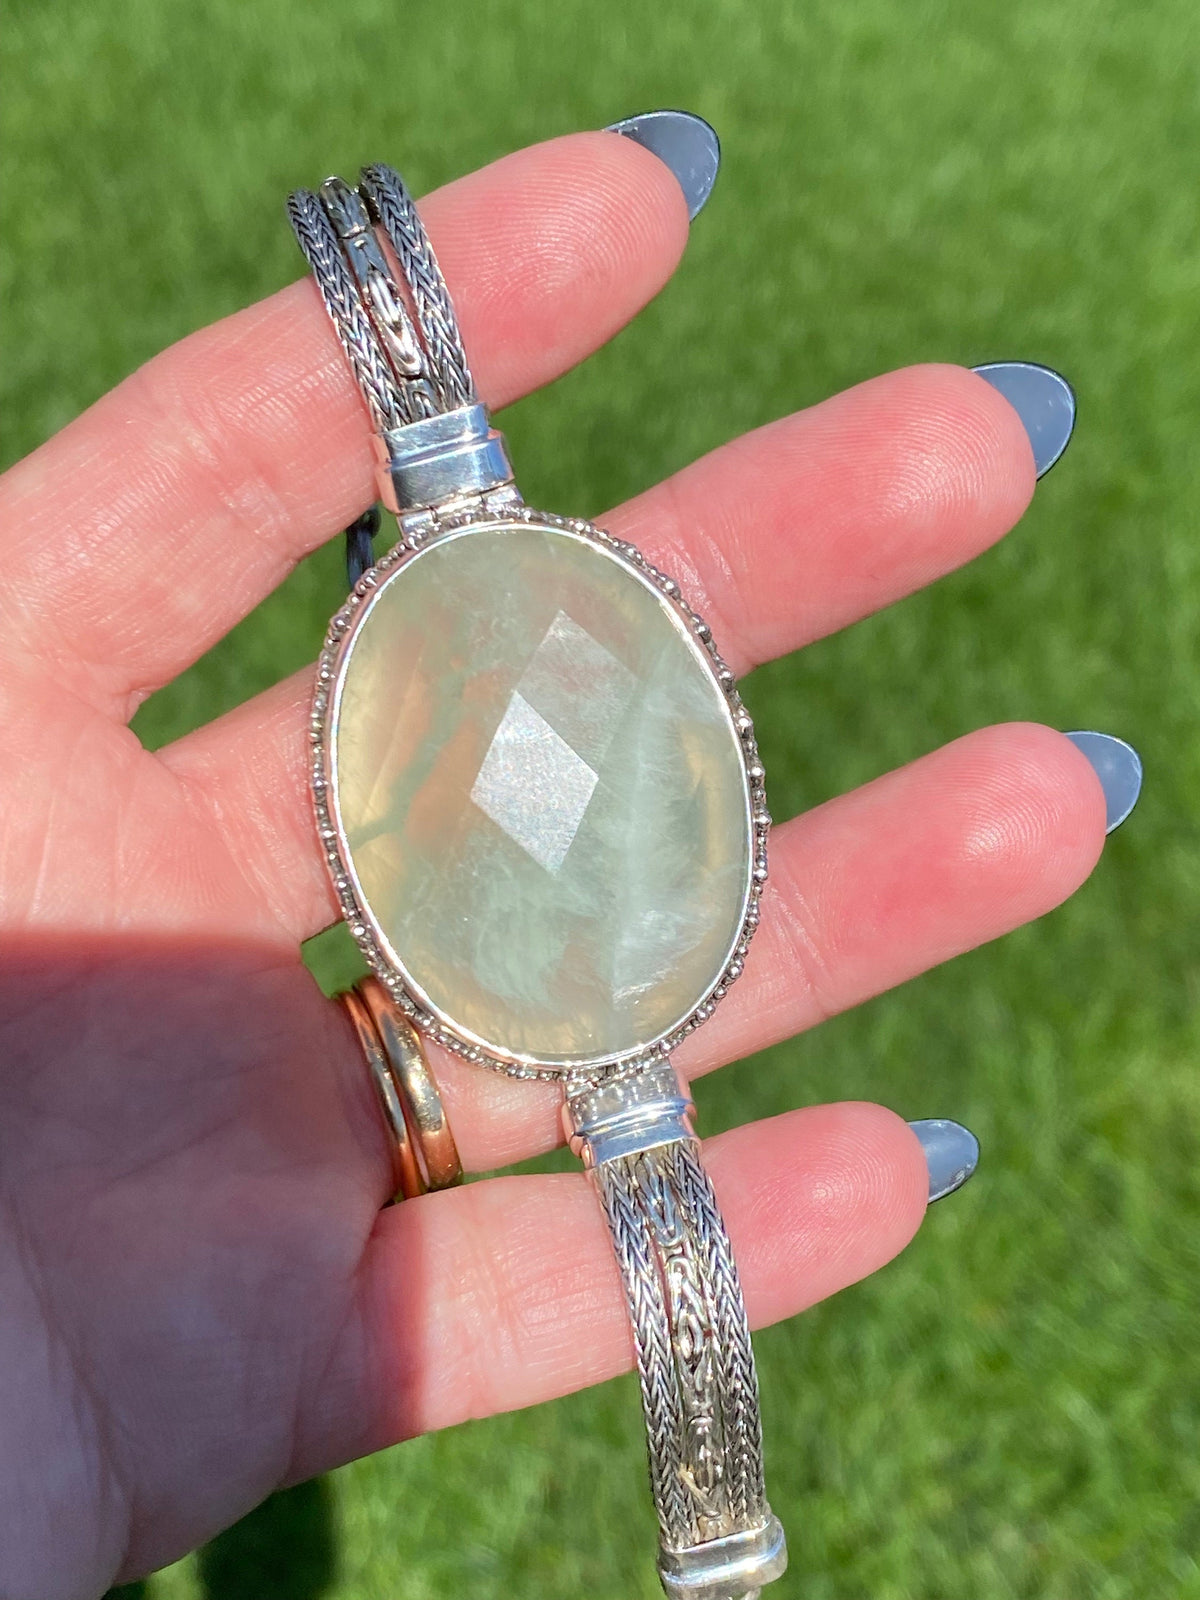 Gorgeous Prehnite Faceted 925 Silver Handmade Hinged Adjustable Bracelet - Crystal Healing Meditation